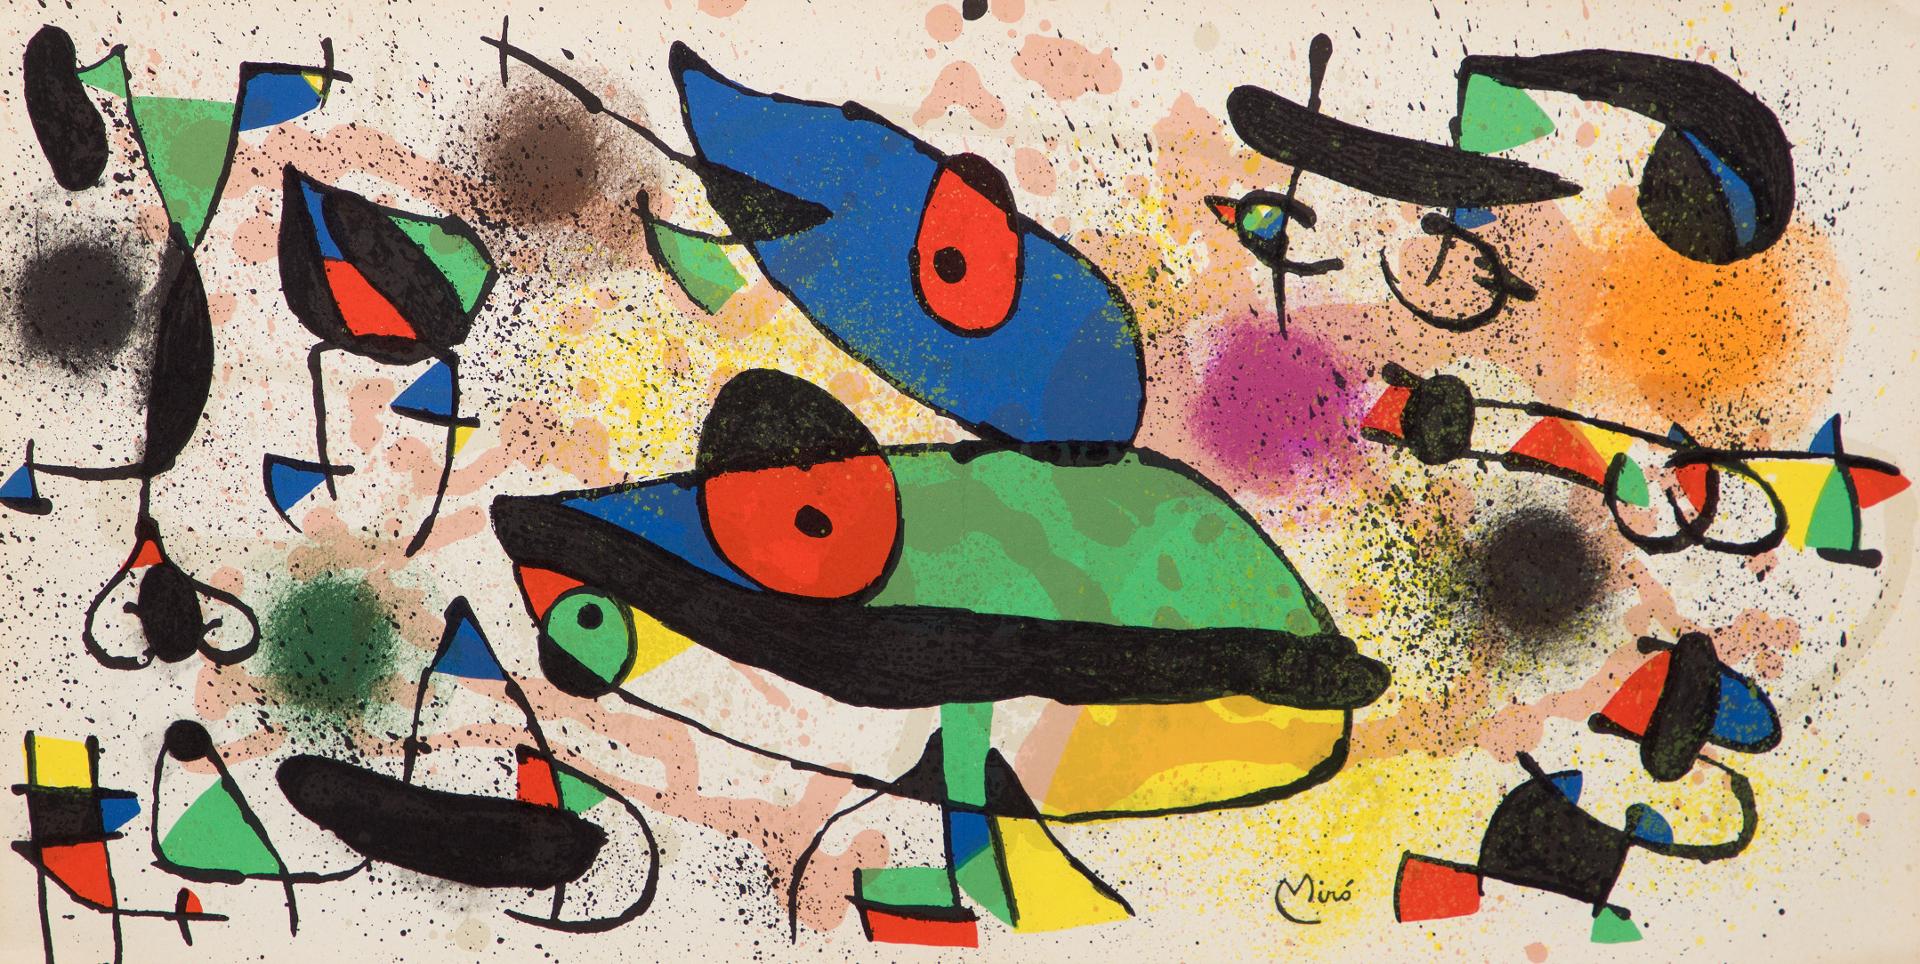 Joan Miró (1893-1983) - Sculptures, 1974